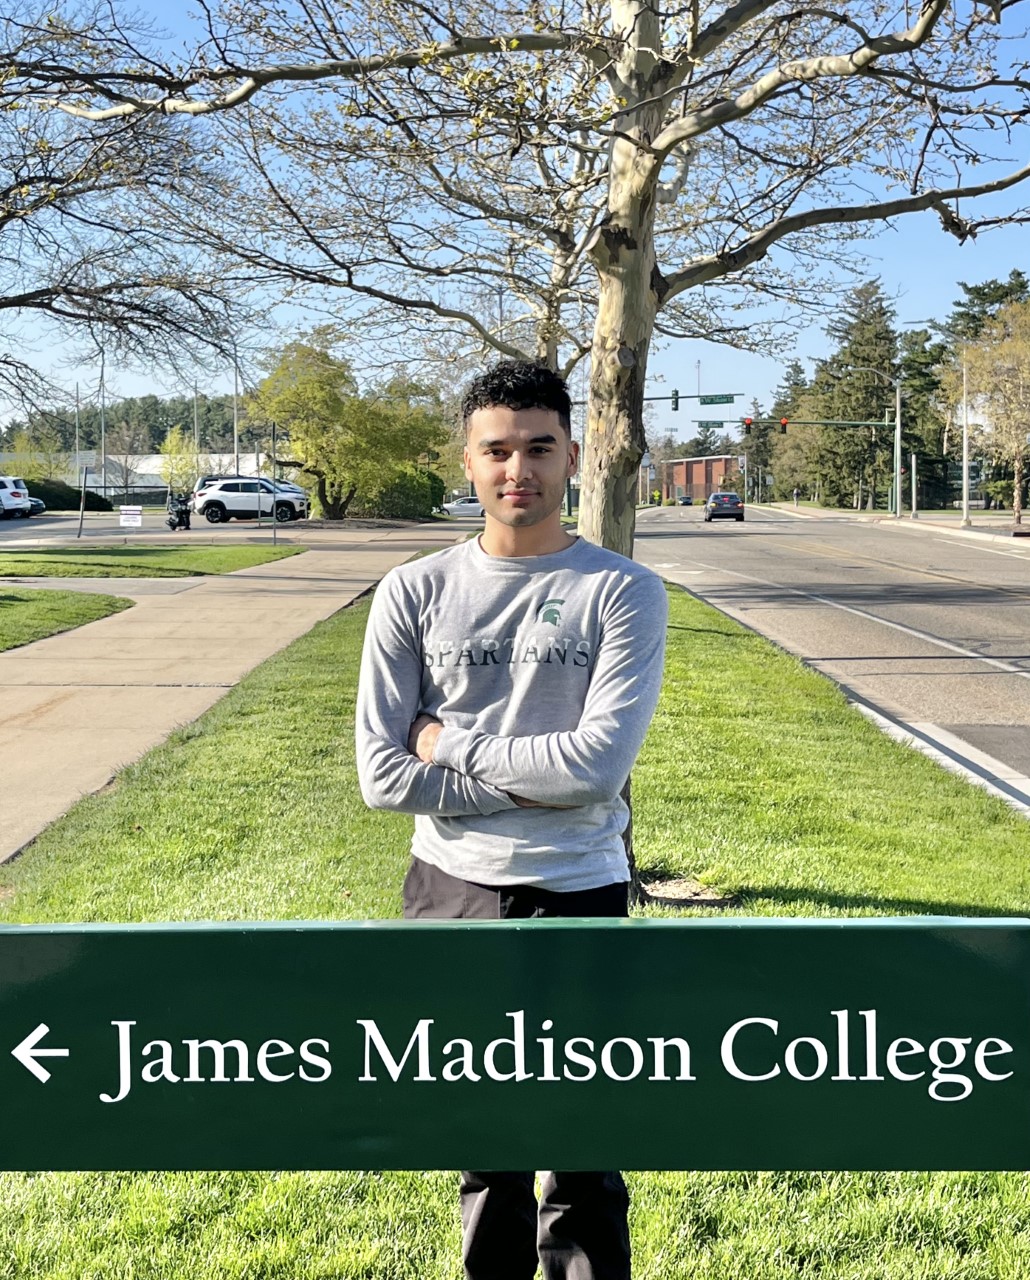 Emilio Silerio Gonzalez behind James Madison College sign